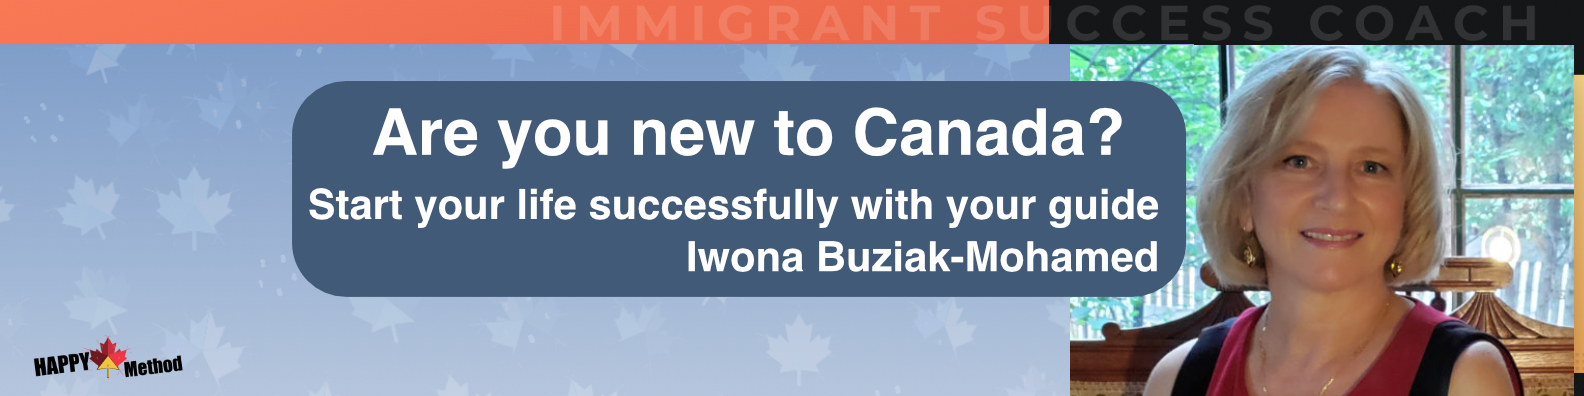 Iwona Buziak-Mohamed - immigrant coach iwonabuziak.com